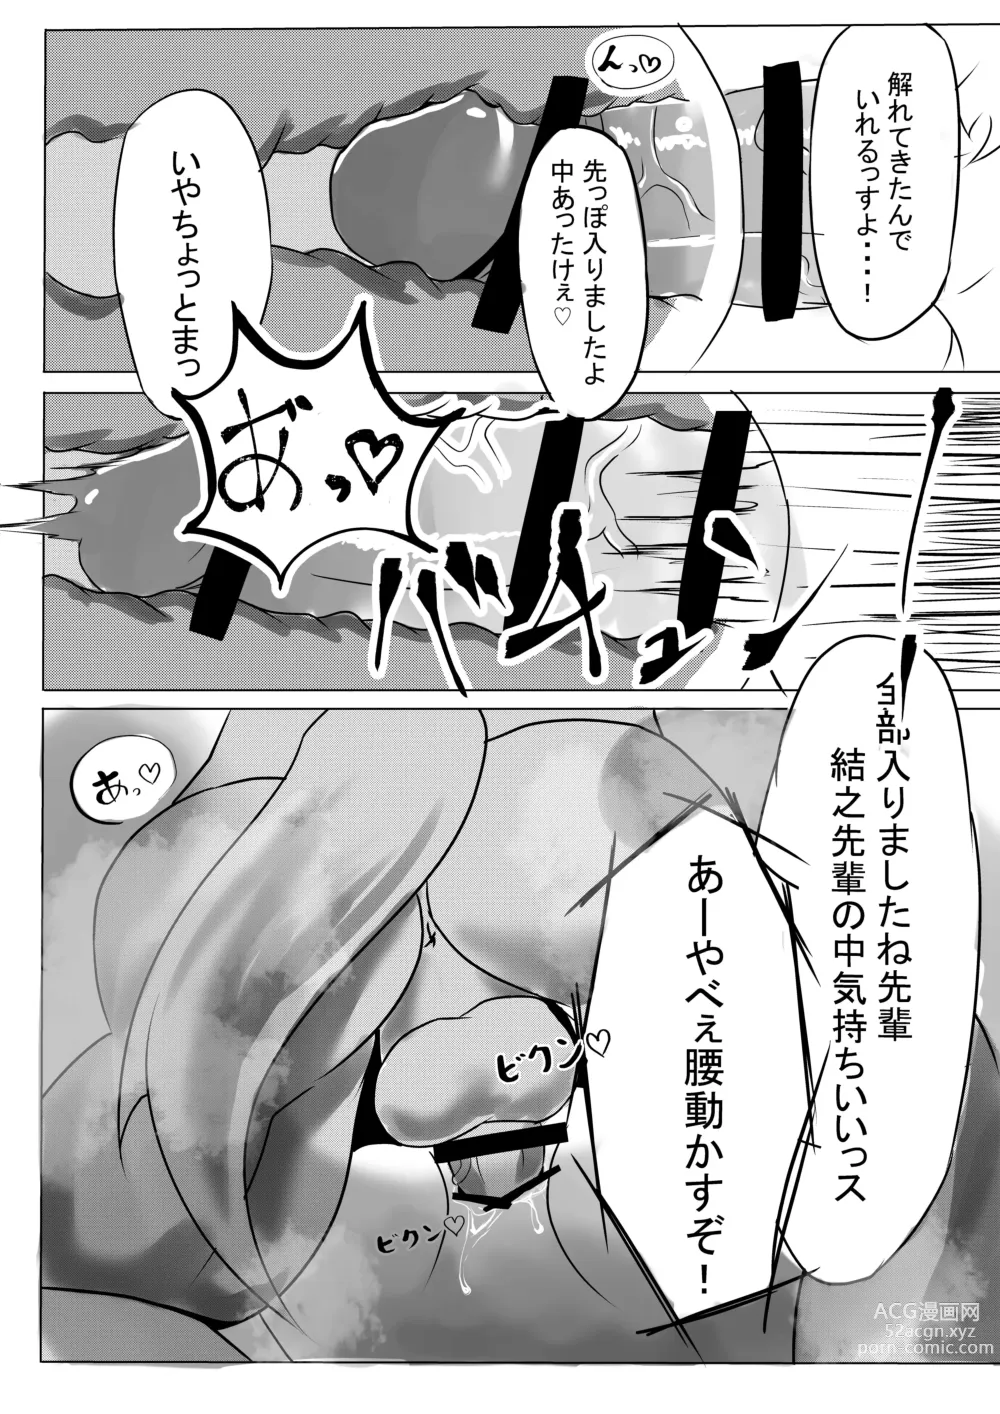 Page 12 of doujinshi Yoru no Ookami